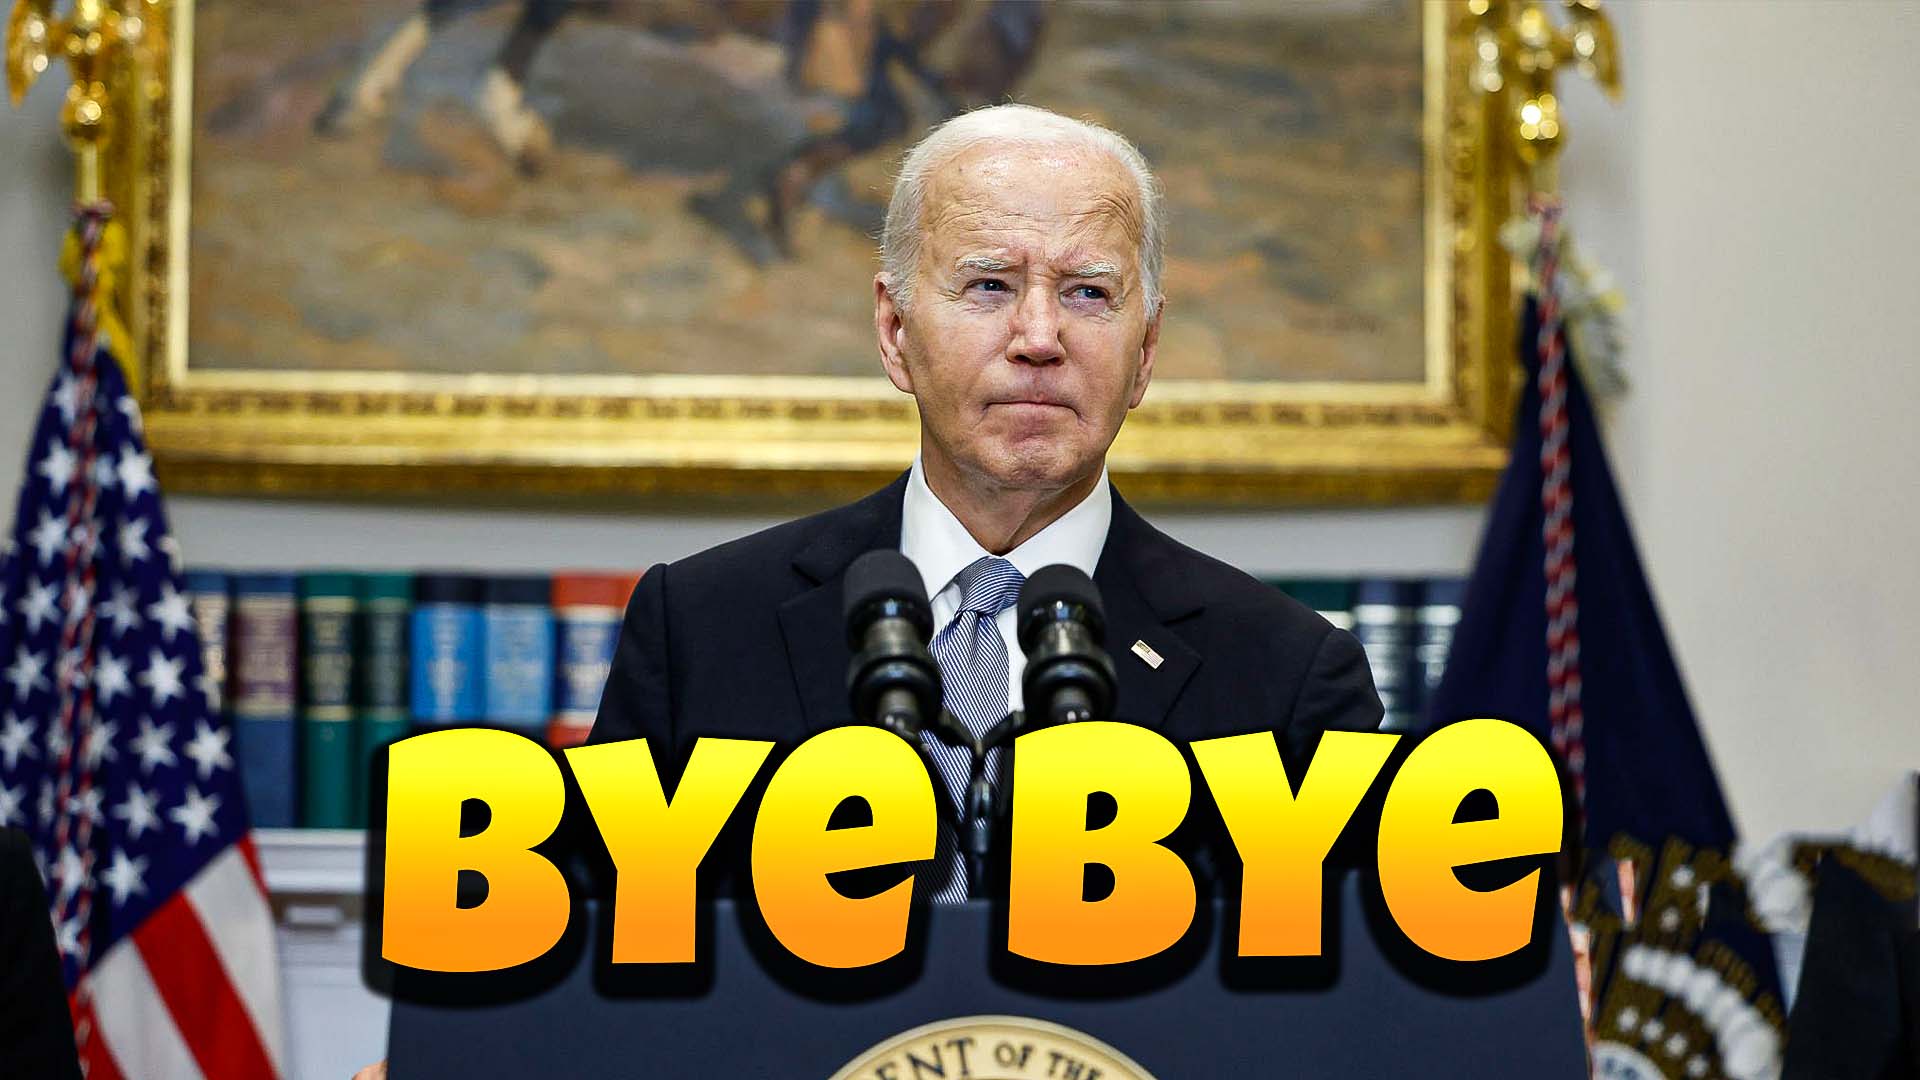 President Biden Announces Decision to Step Down, Endorses Harris for 2024